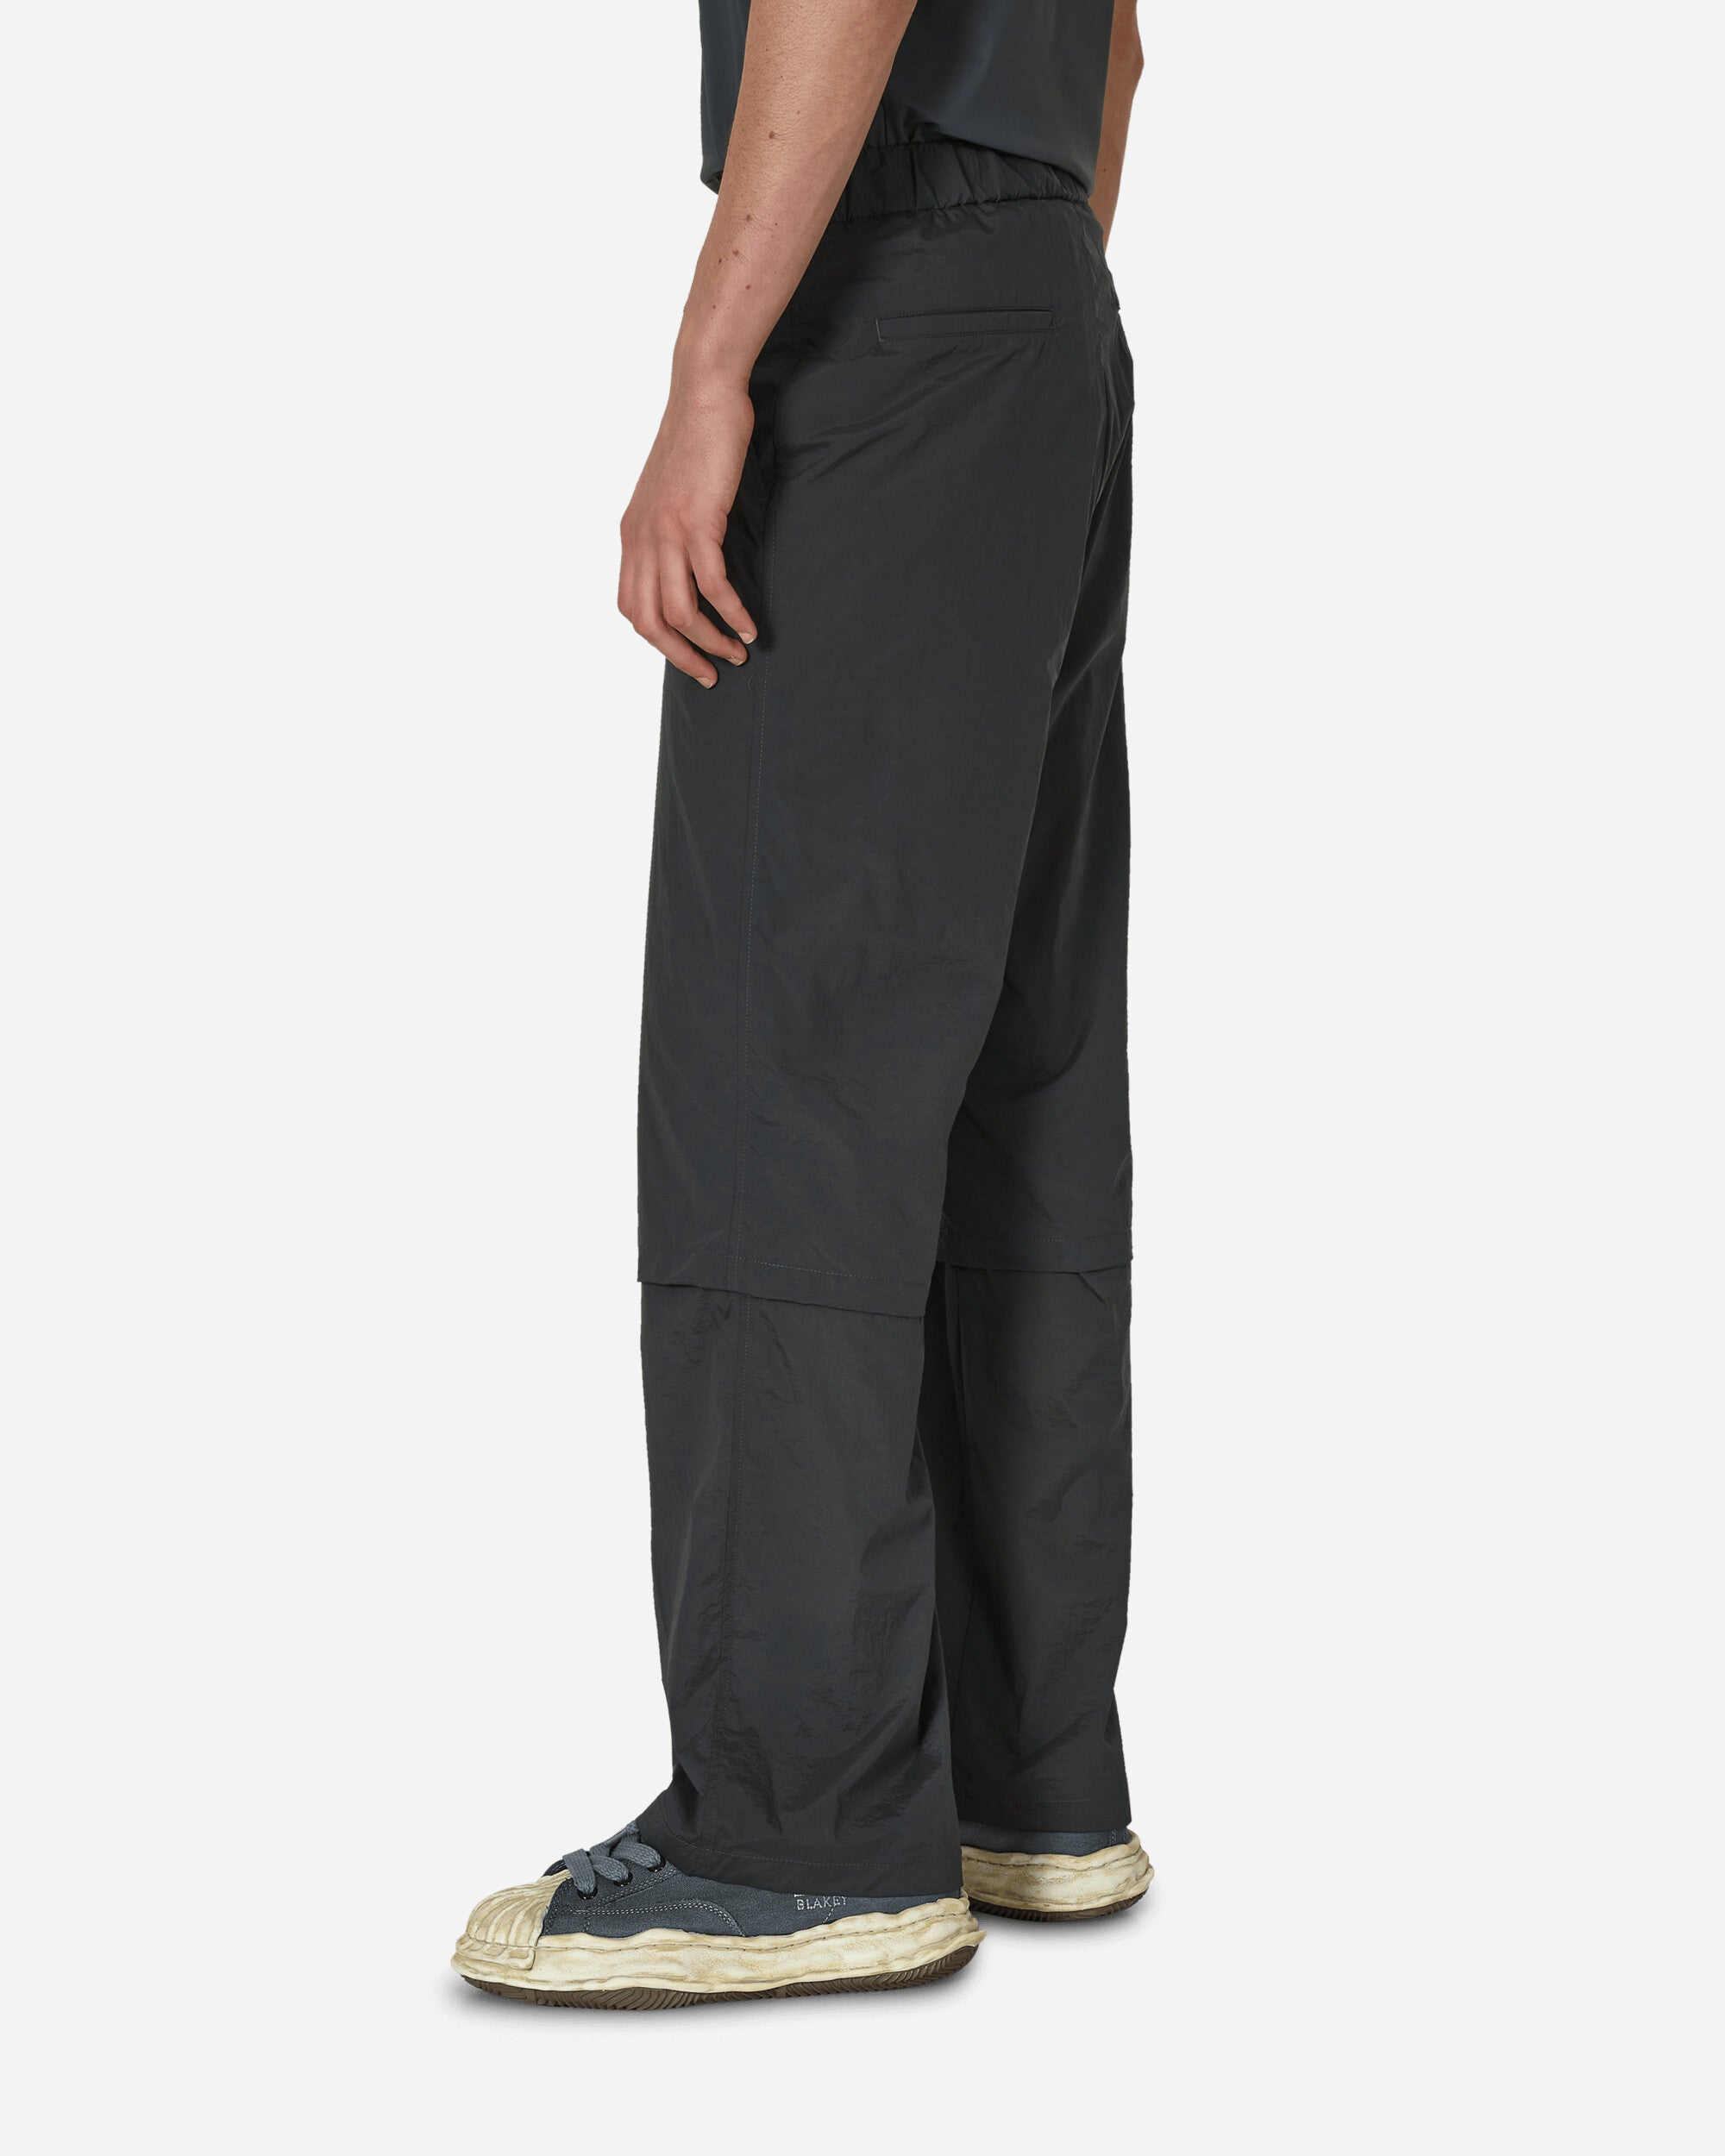 AMOMENTO Sheer Layered Pants Charcoal Pants Trousers AM24SSM07PT CHCL